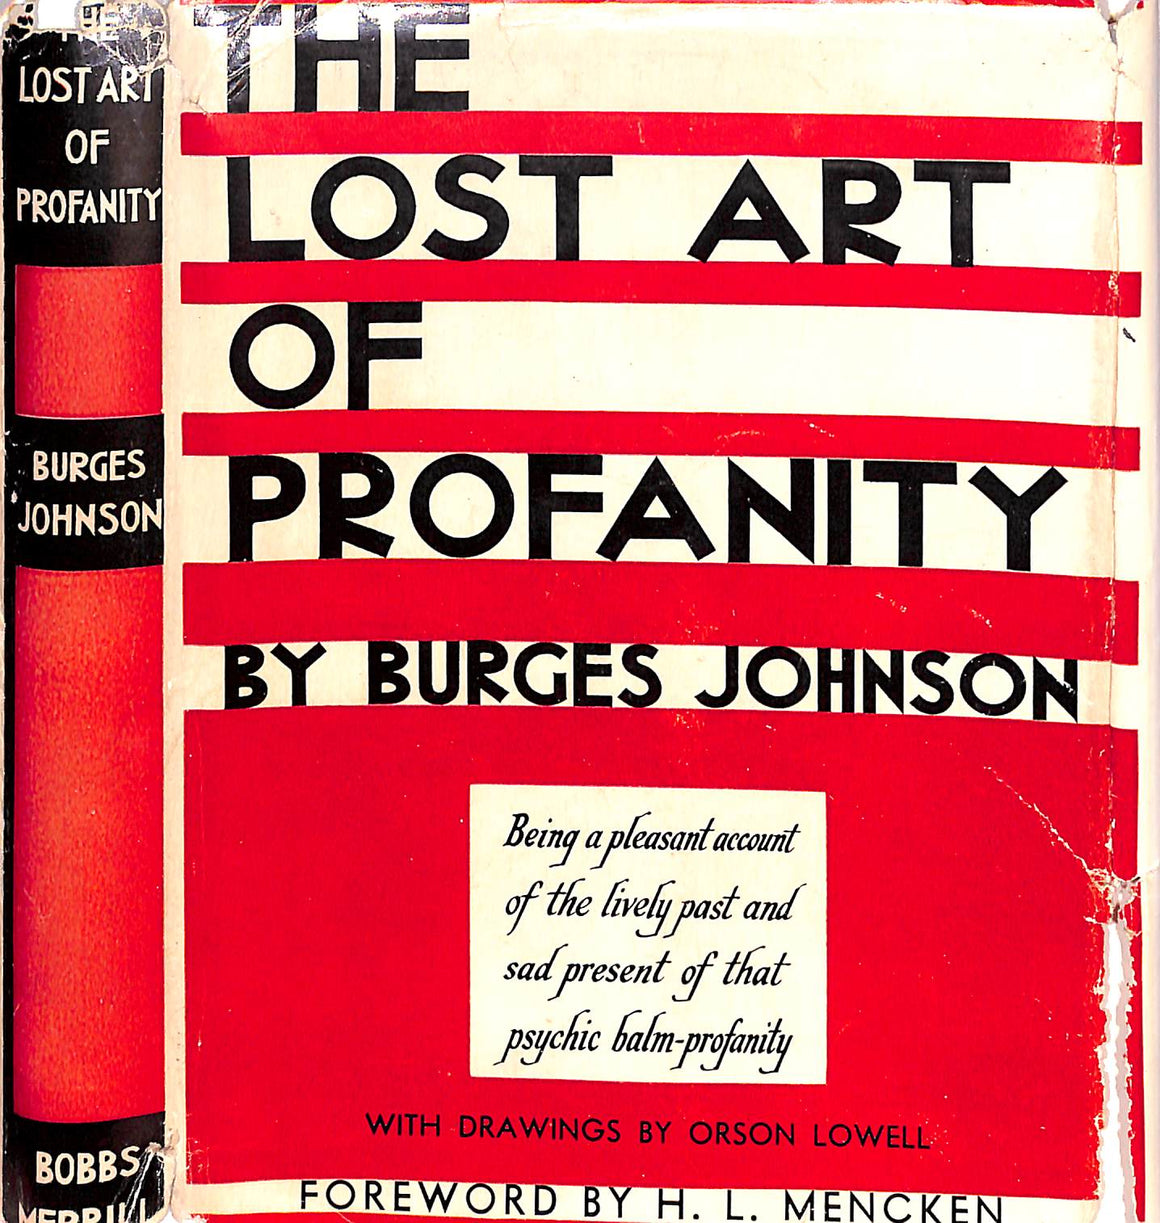 "The Lost Art Of Profanity" 1948 JOHNSON, Burges